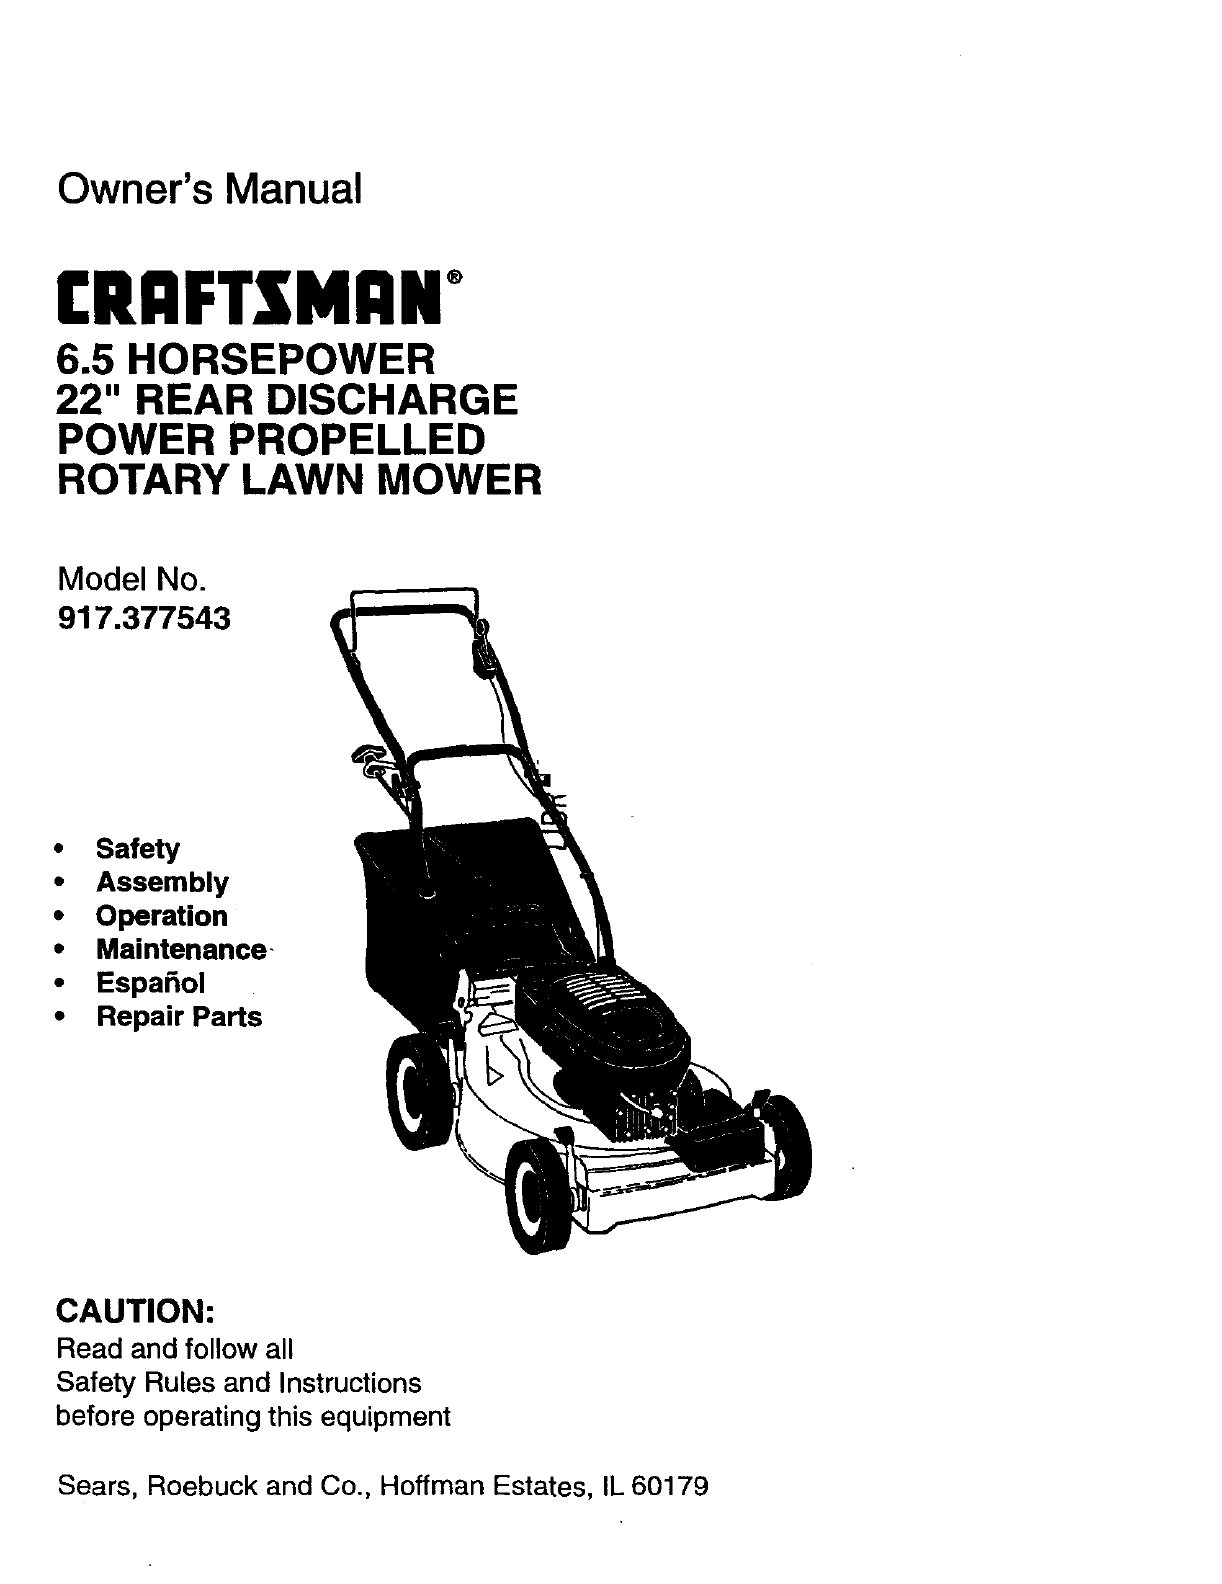 Craftsman Lawn Mower Service Youtube